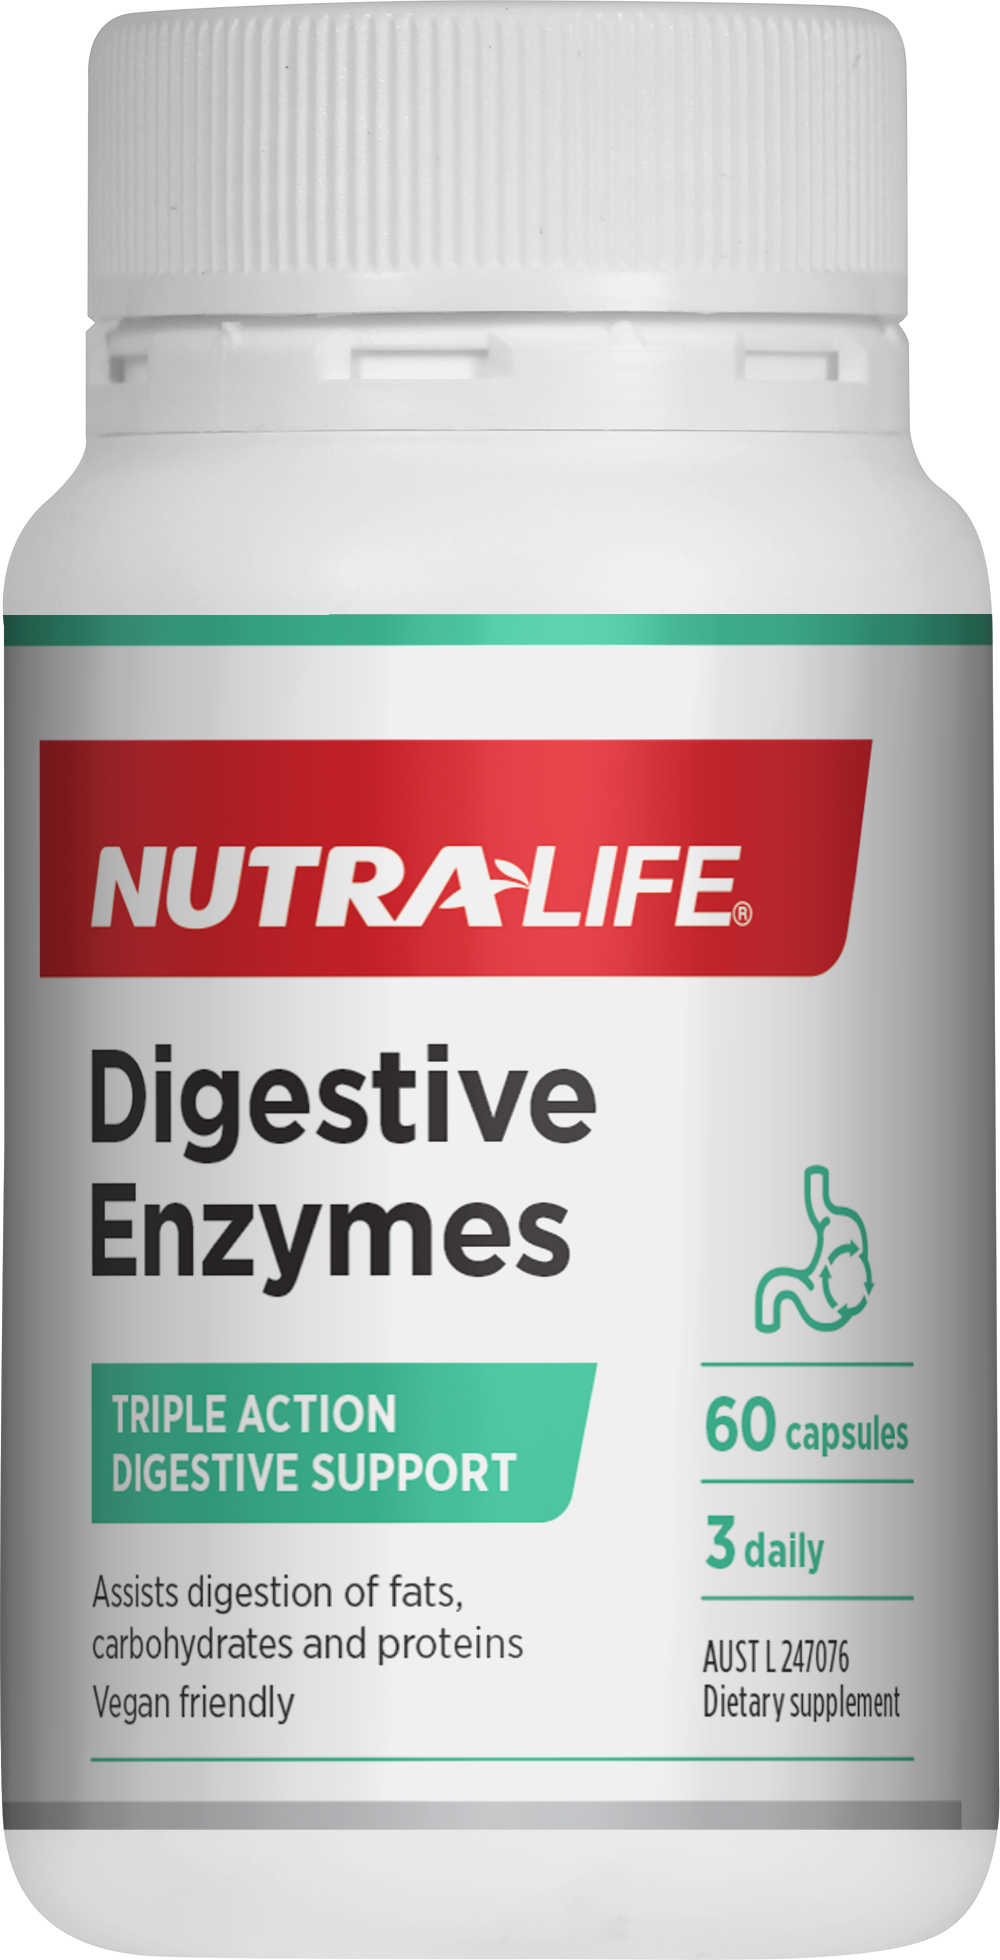 Nutralife Digestive Enzymes capsules 60